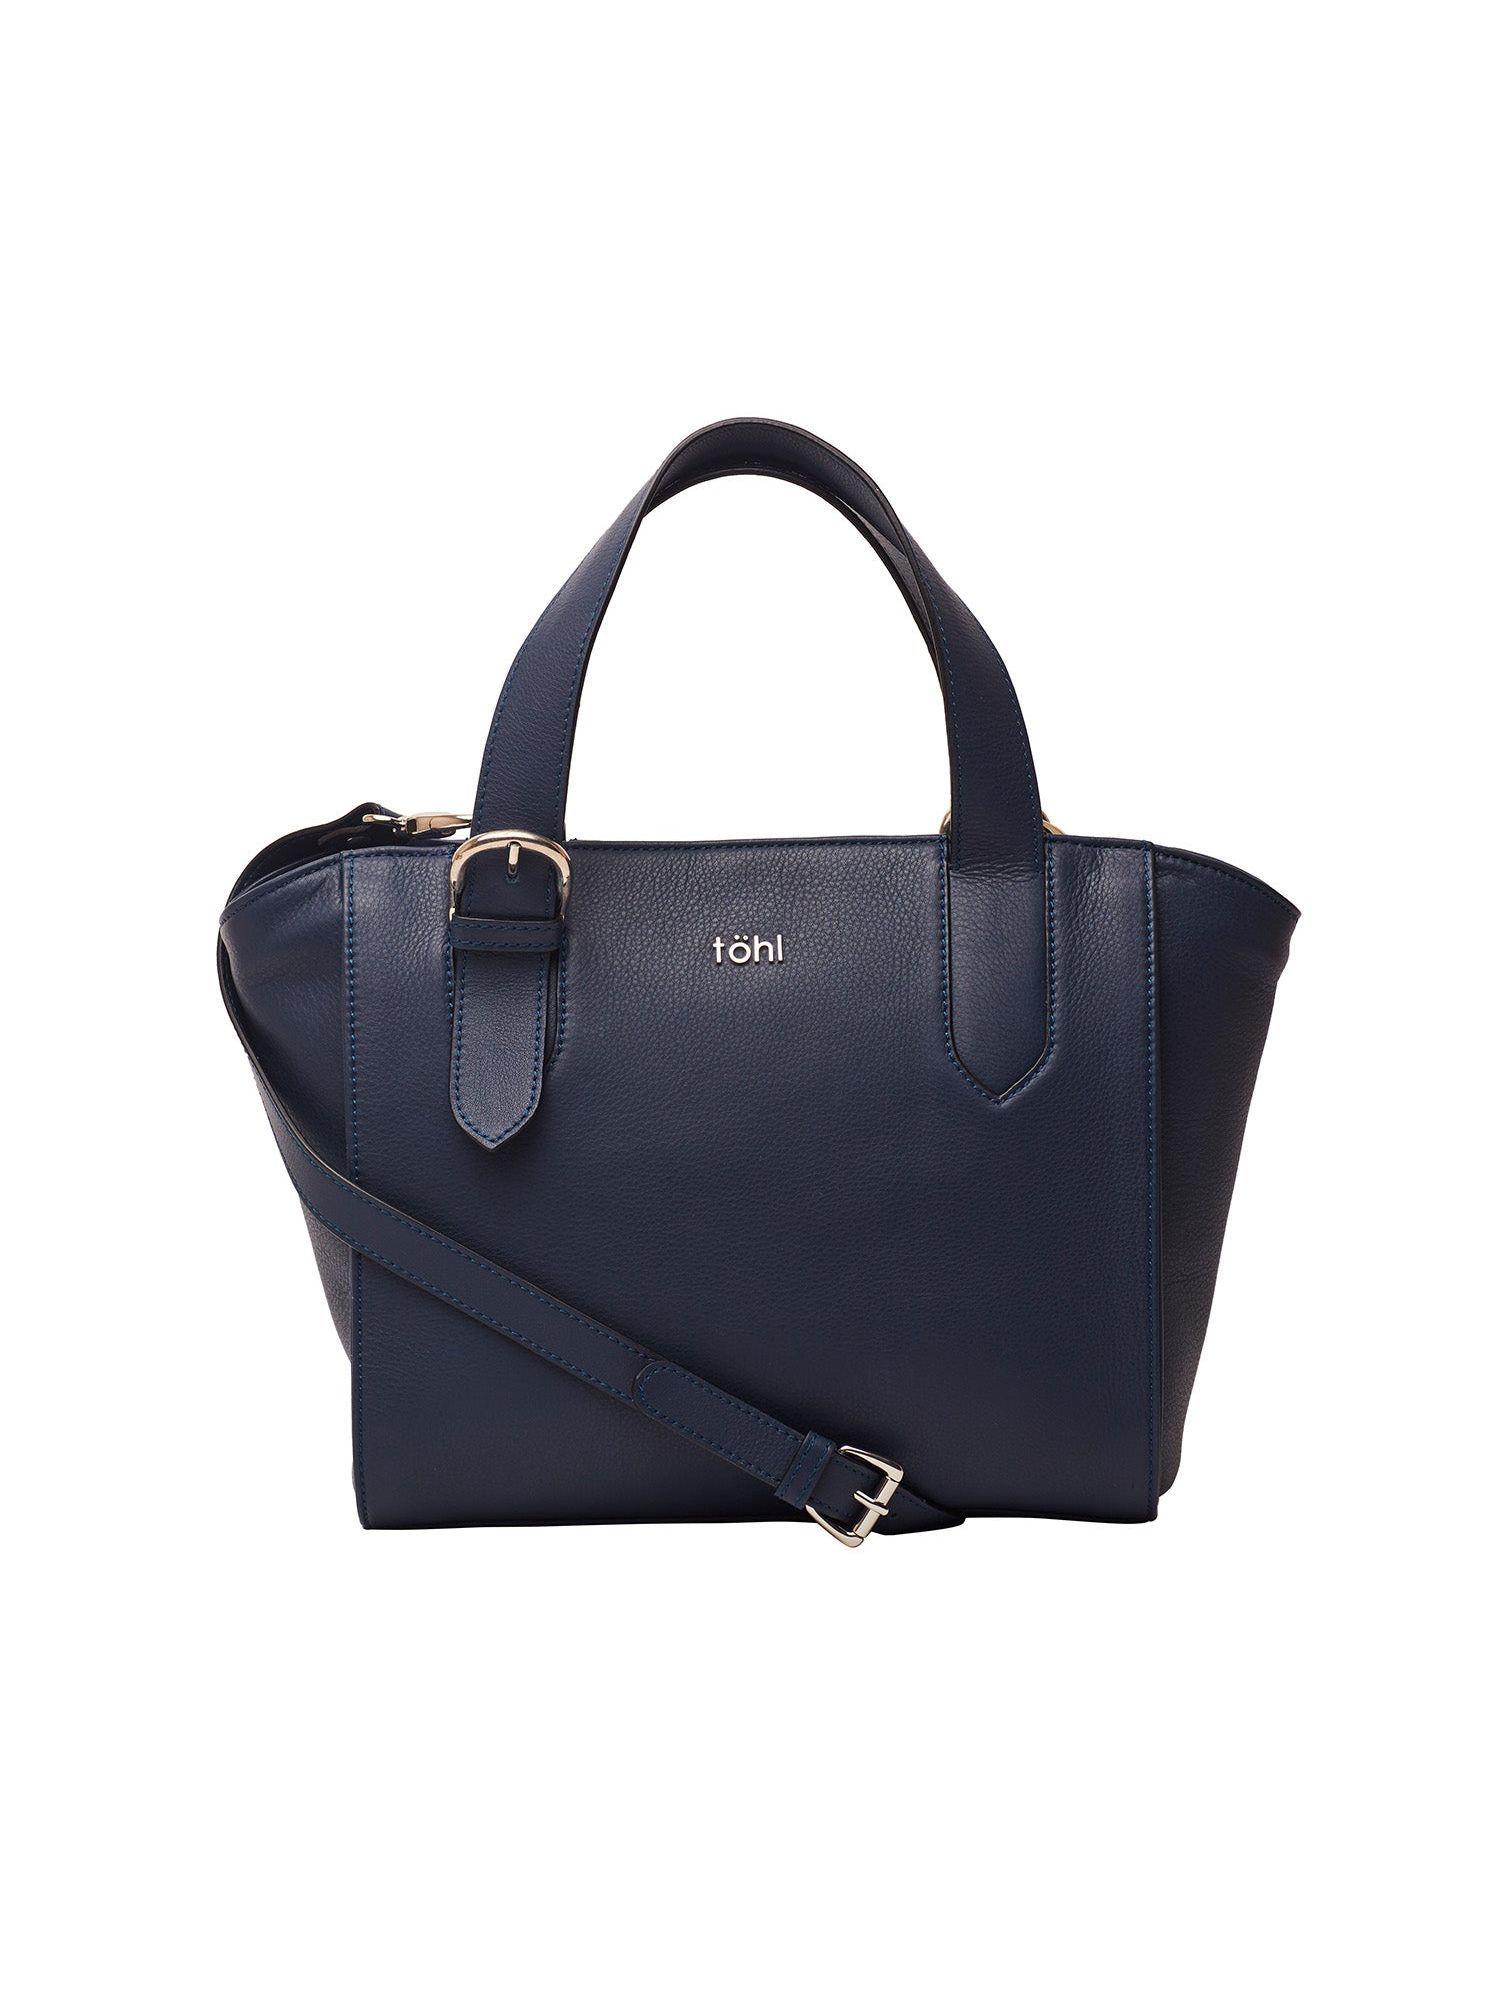 lombard womens handbag - navy blue